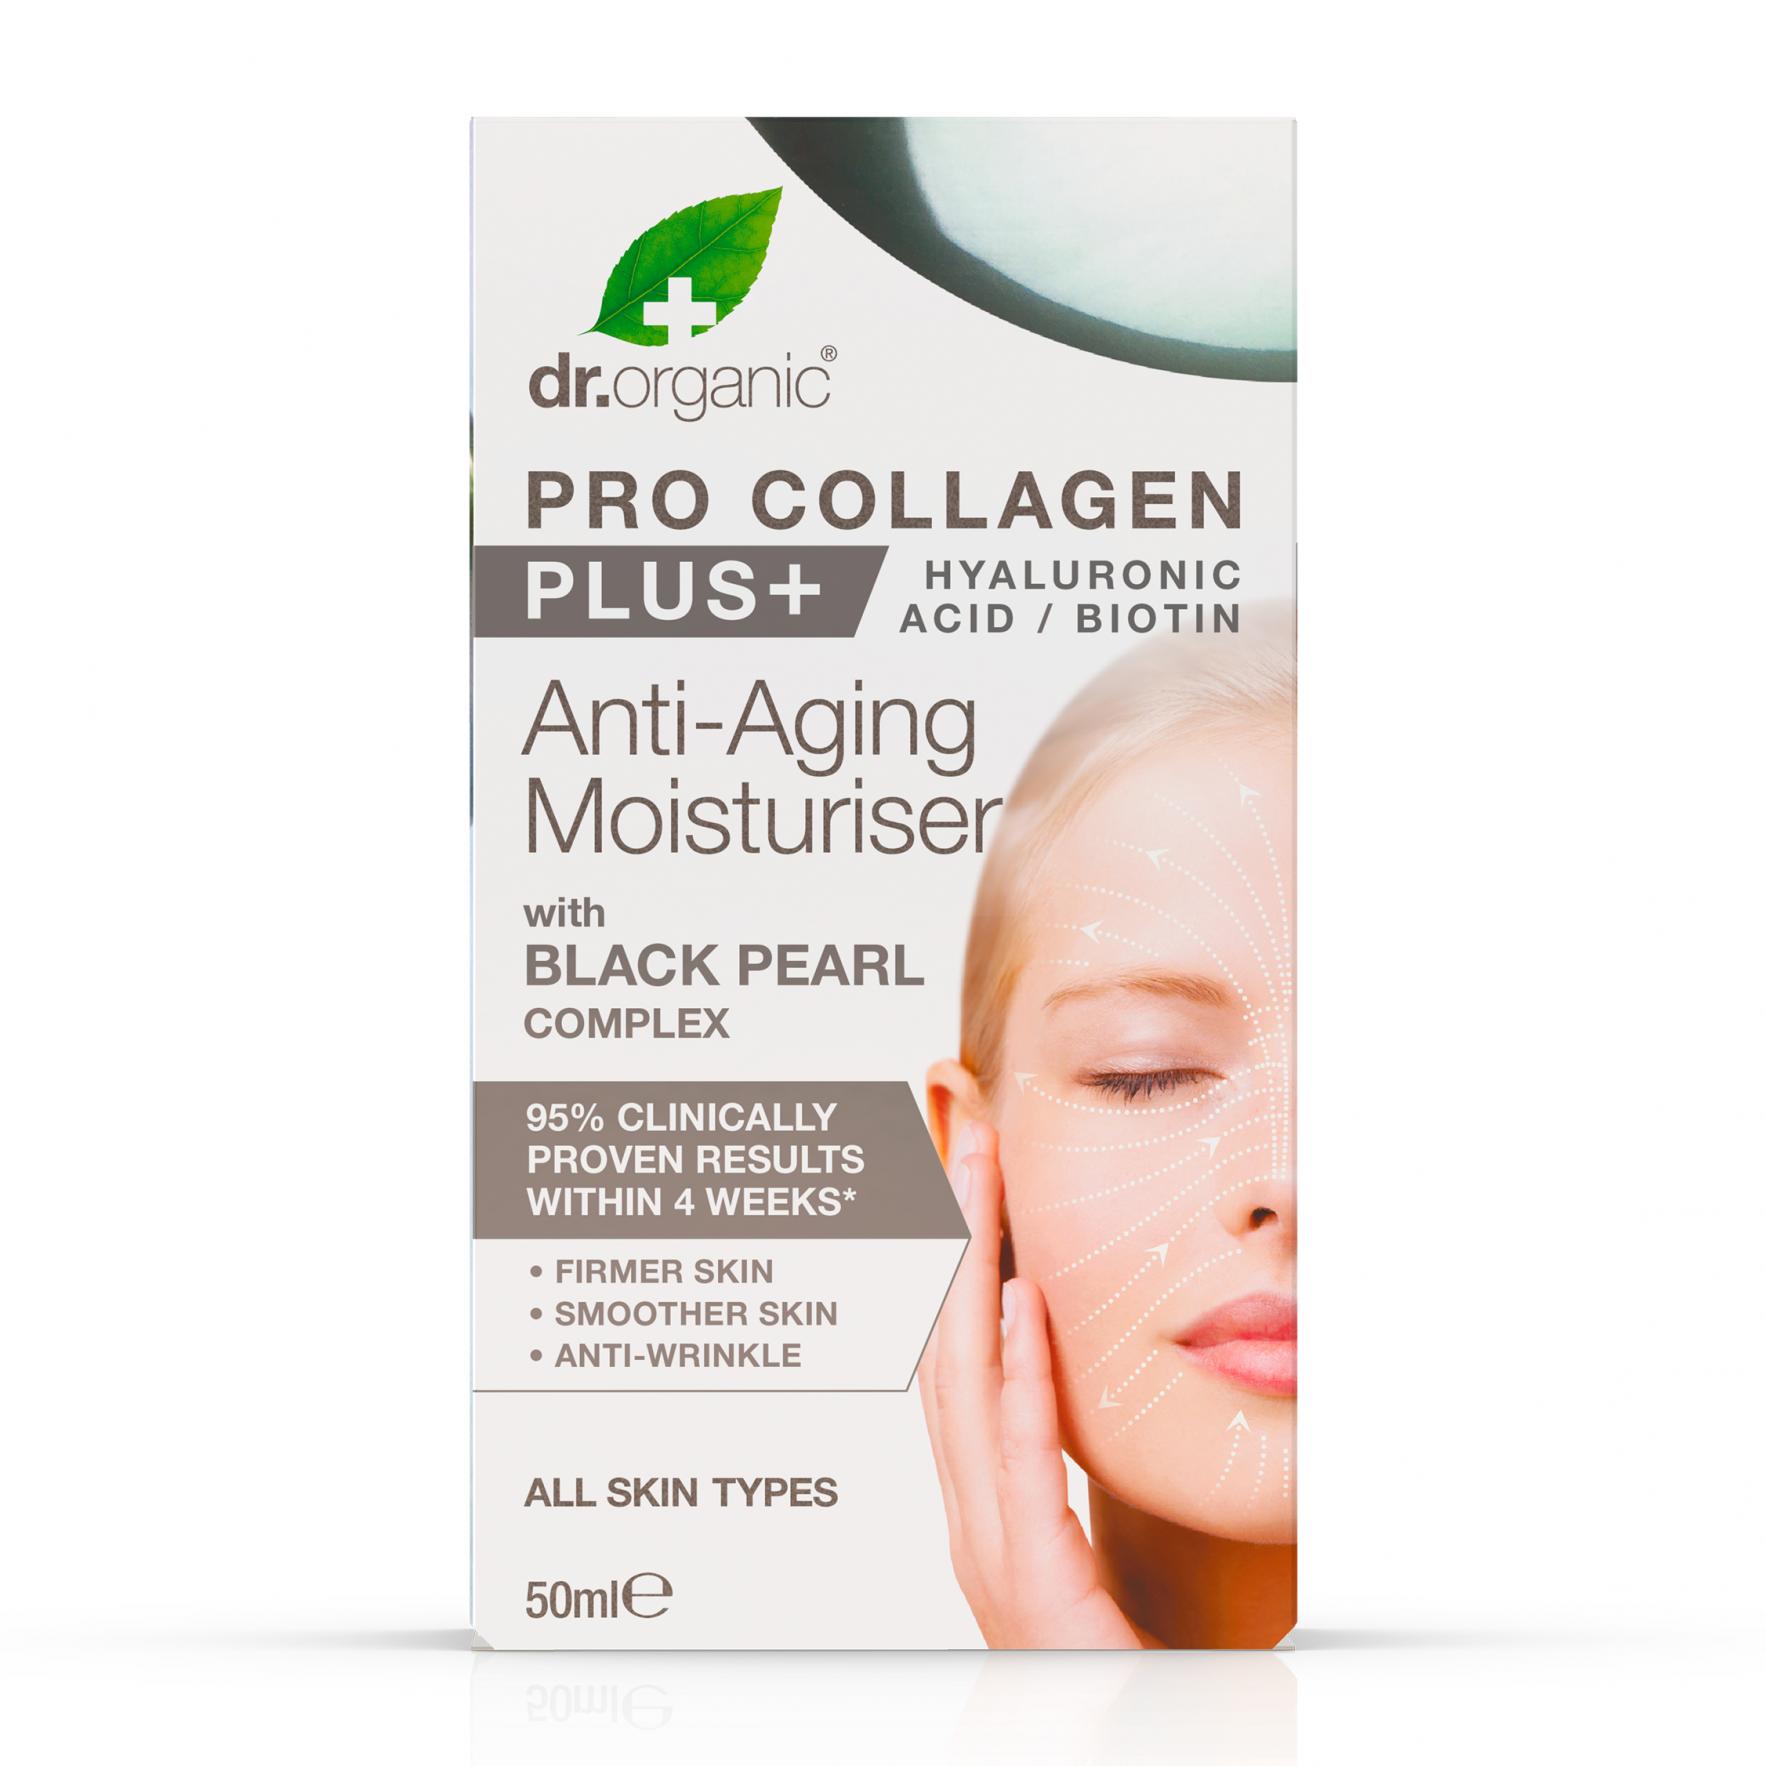 Pro Collagen Plus+ Anti-Aging Moisturiser with Black Pearl Complex 50ml